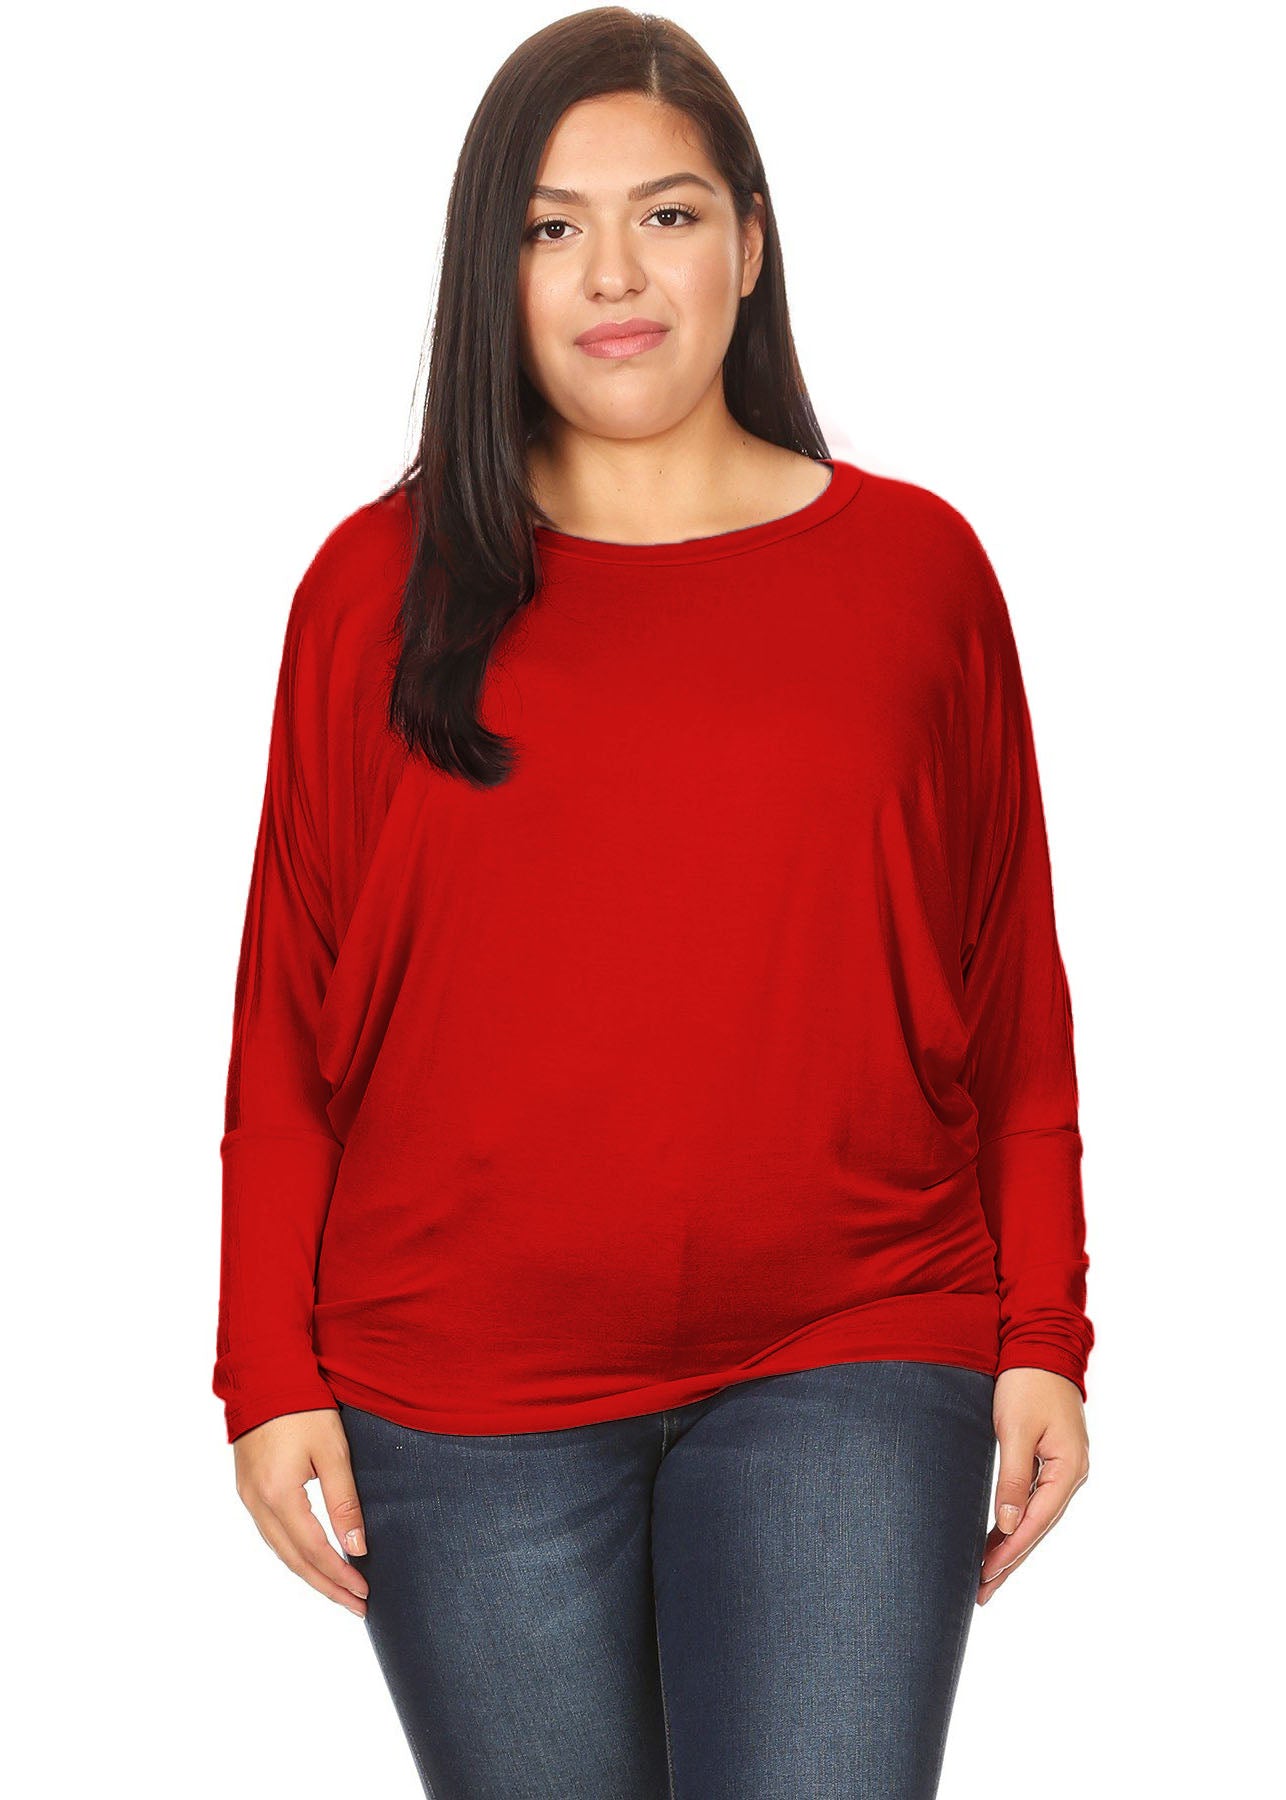 Hi Curvy Plus Size Women Dolman Long Sleeve Shirts Made in USA